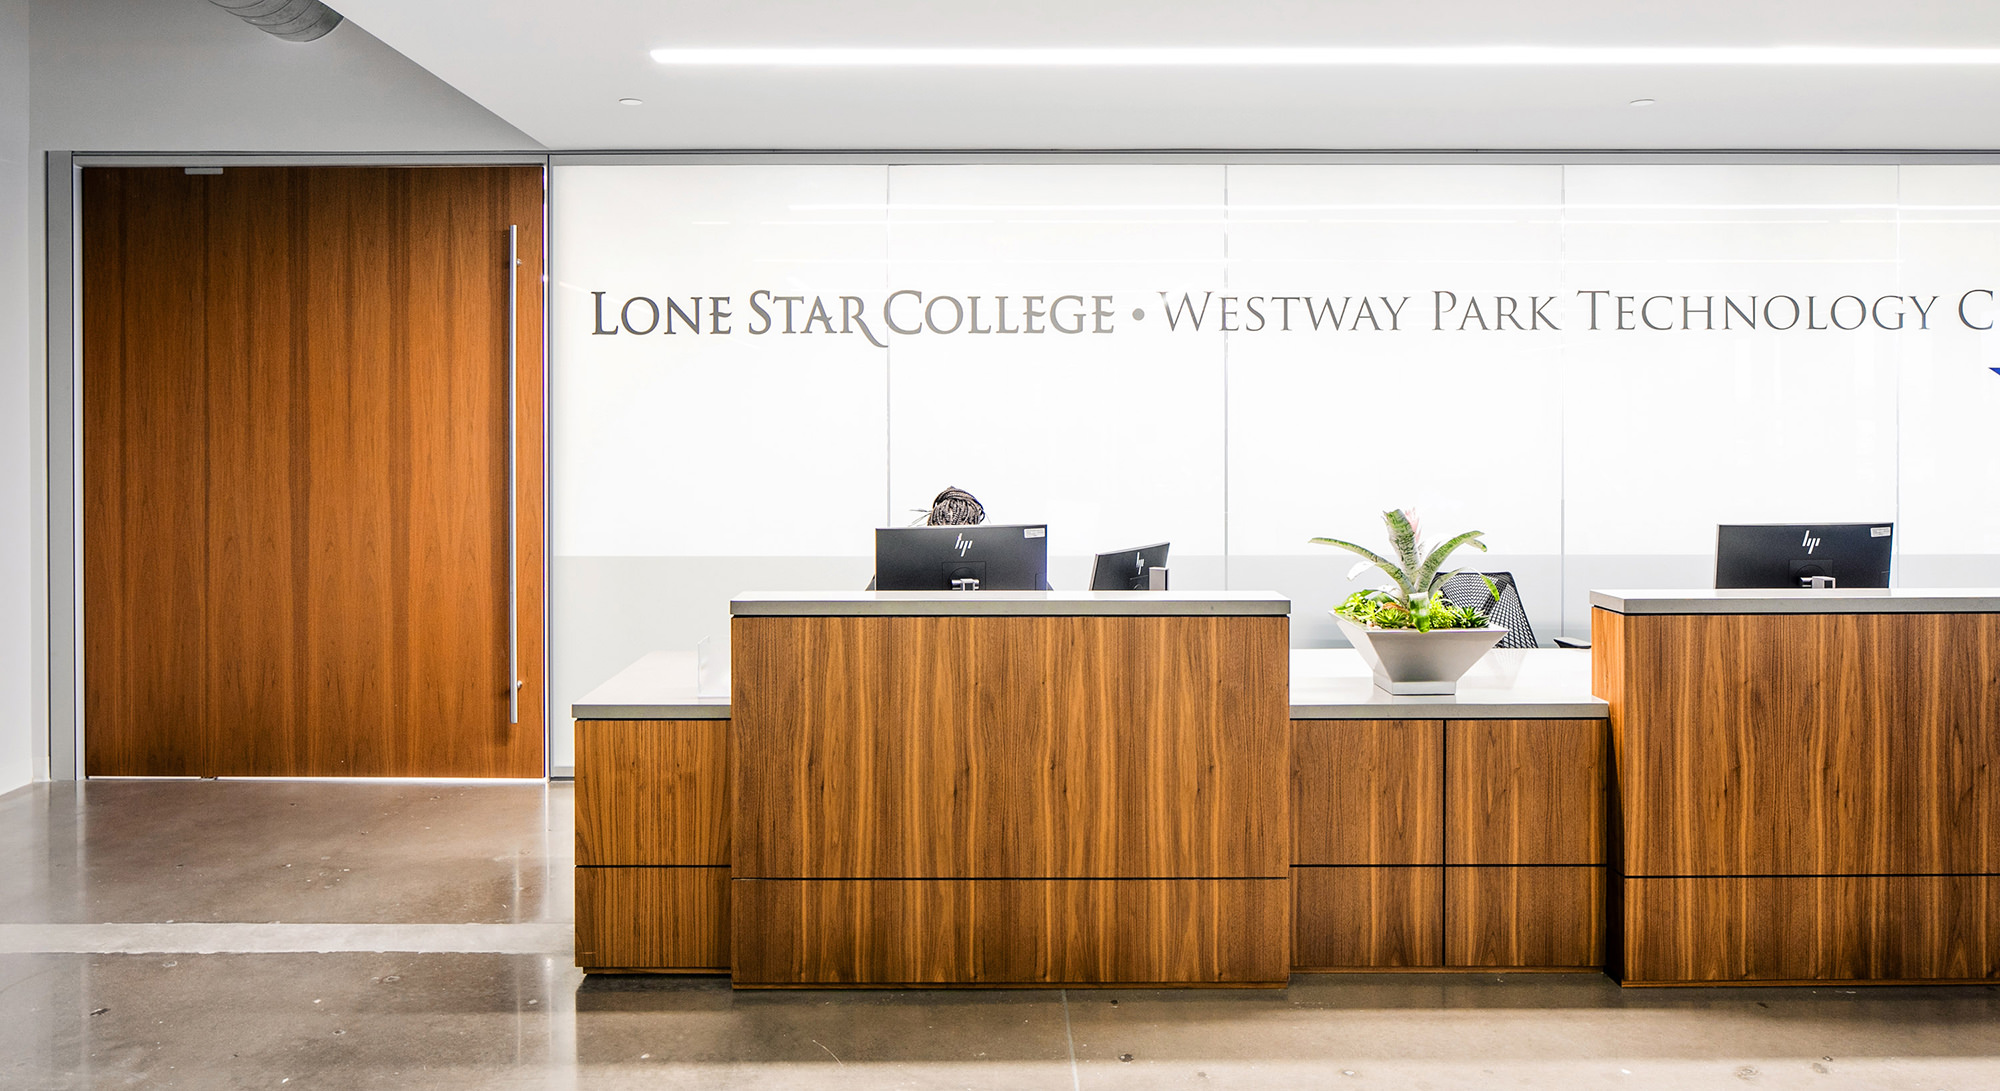 Lone Star College Westway Park